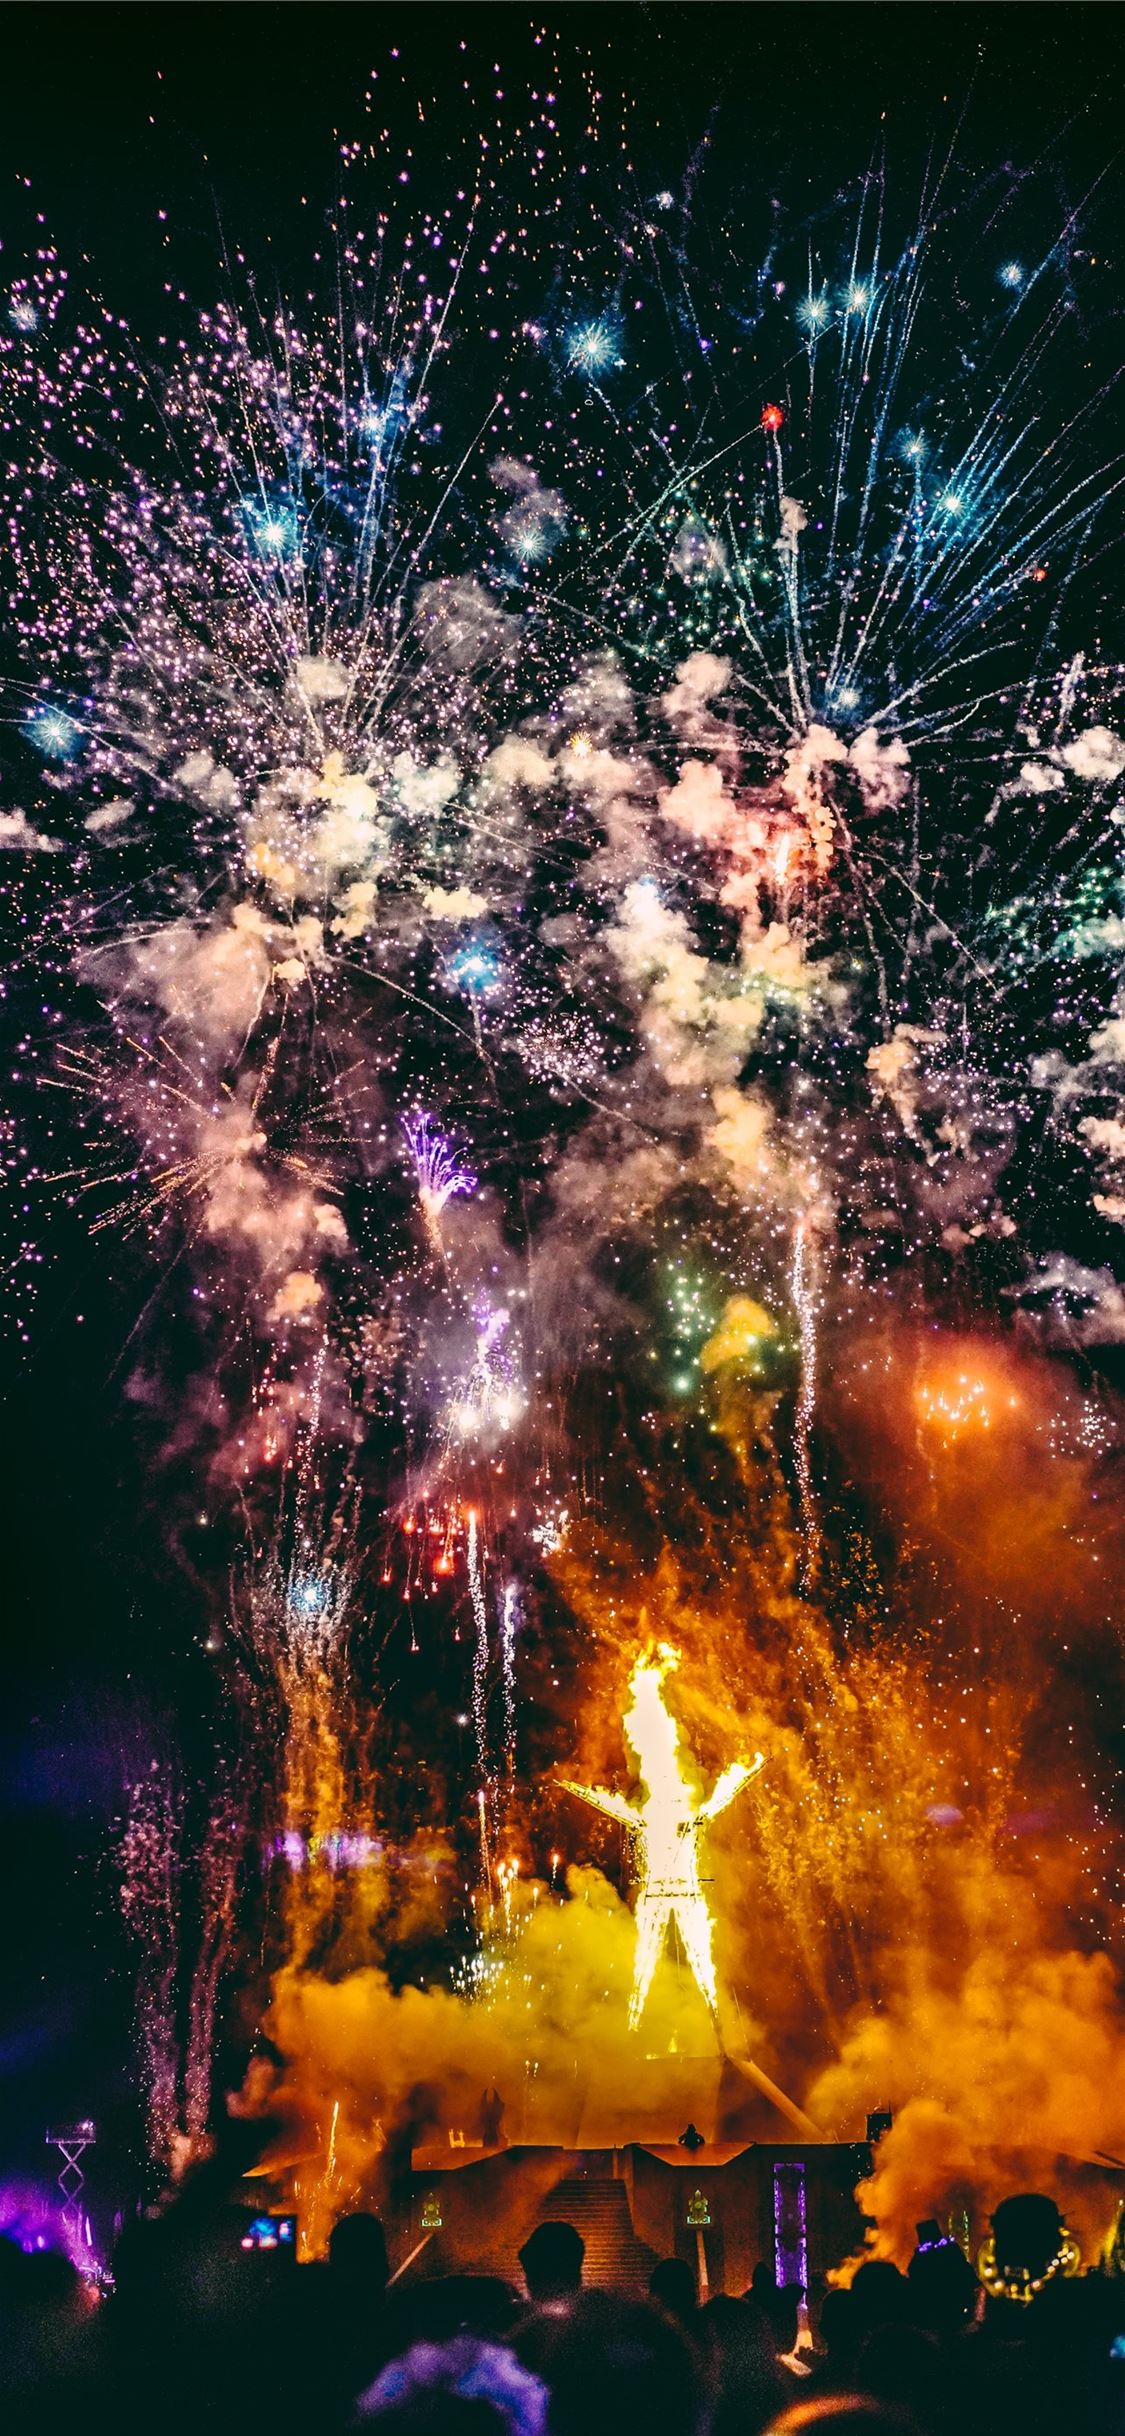 crowd of people watching fireworks display iPhone X wallpaper 